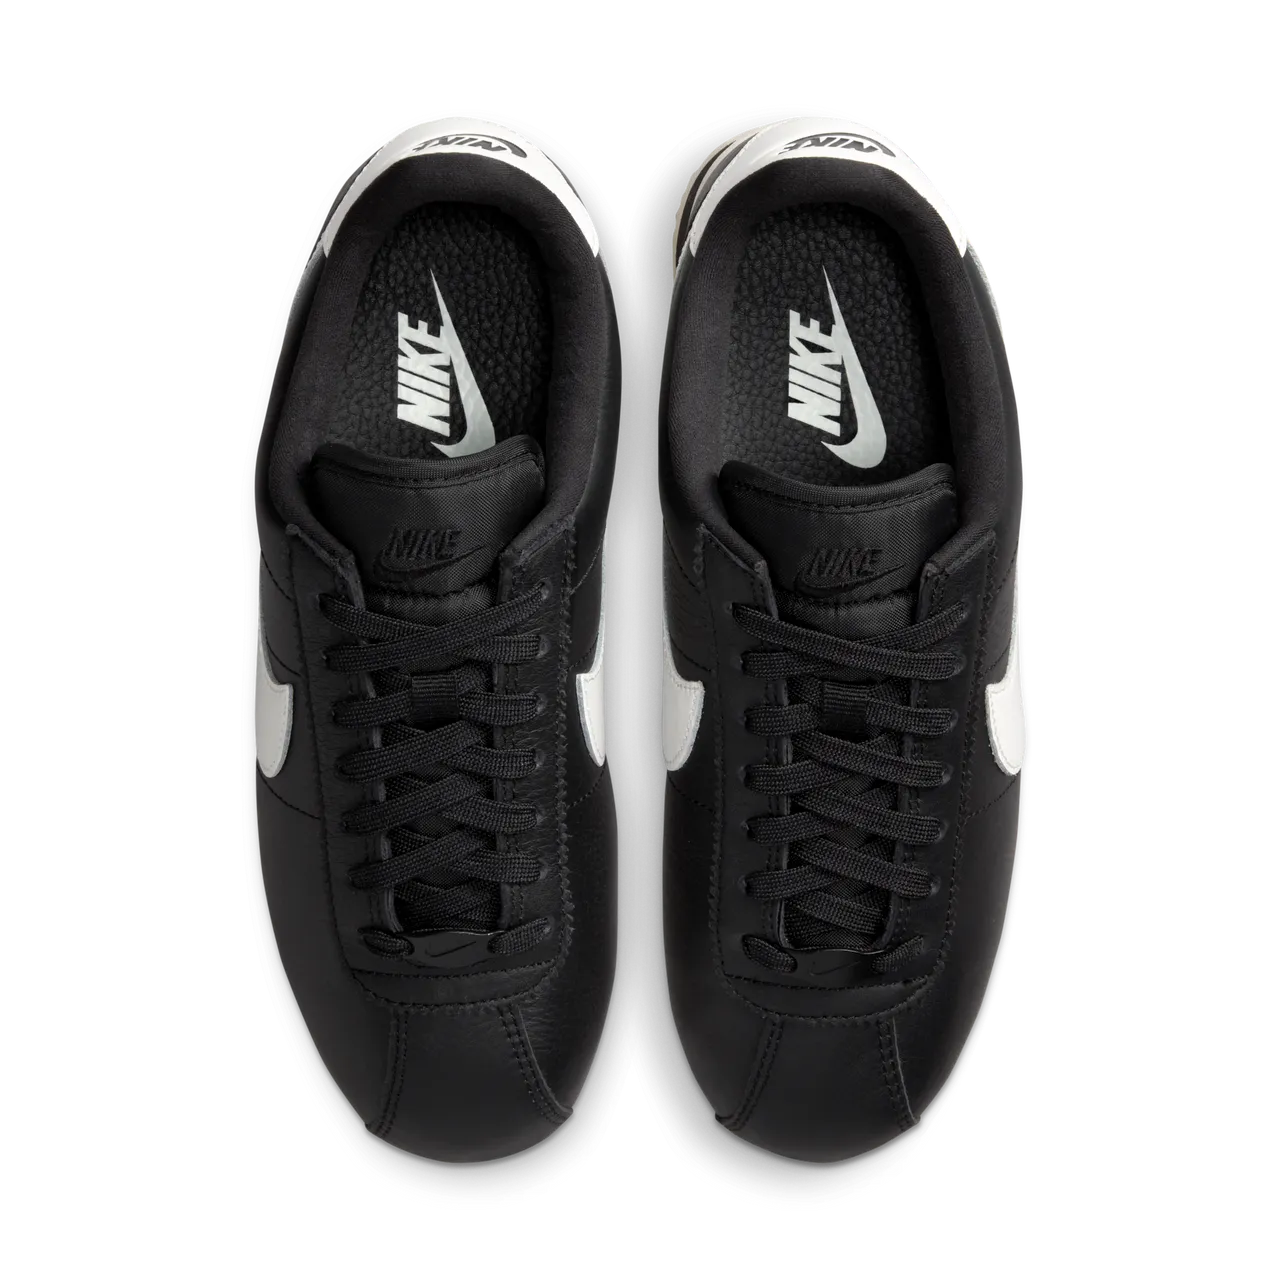 Nike Cortez 23 Premium Leather Women's Shoes - Black - Leather